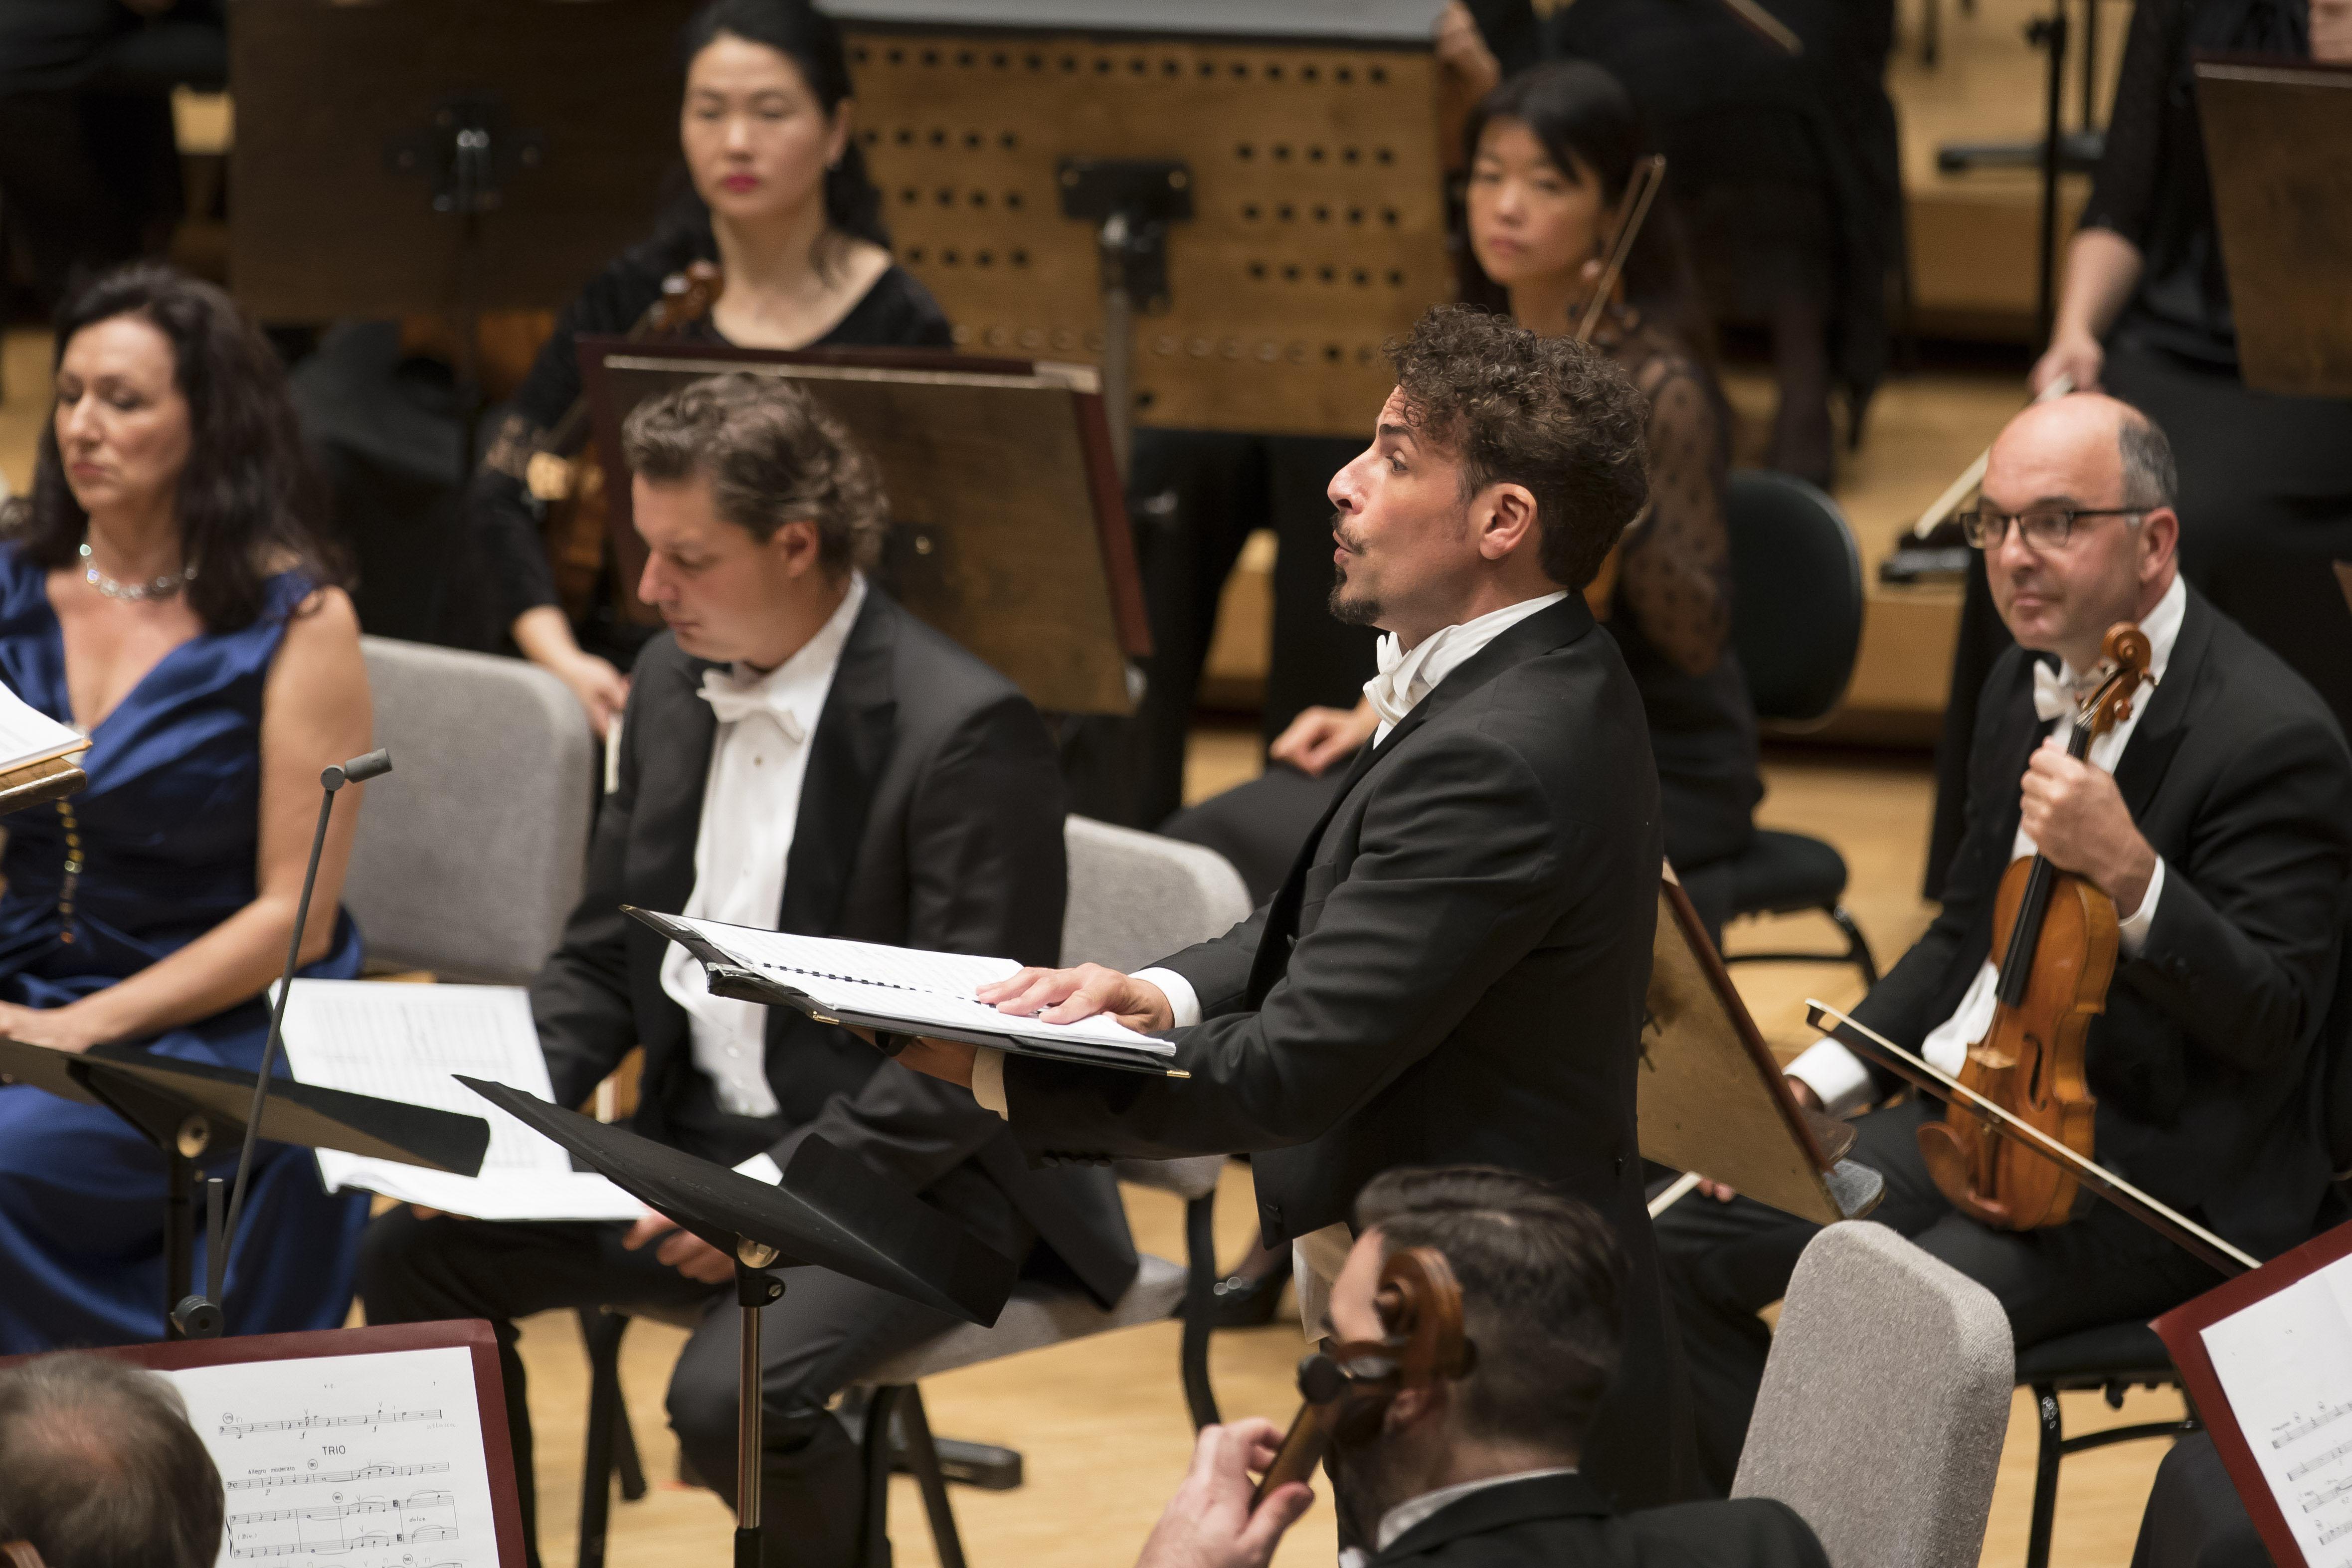 Tenor Enea Scala debuts as soloist with the Chicago Symphony Orchestra in Cherubini’s “Chant sur la mort de Joseph Haydn” led by Music Director Riccardo Muti. (© Todd Rosenberg)